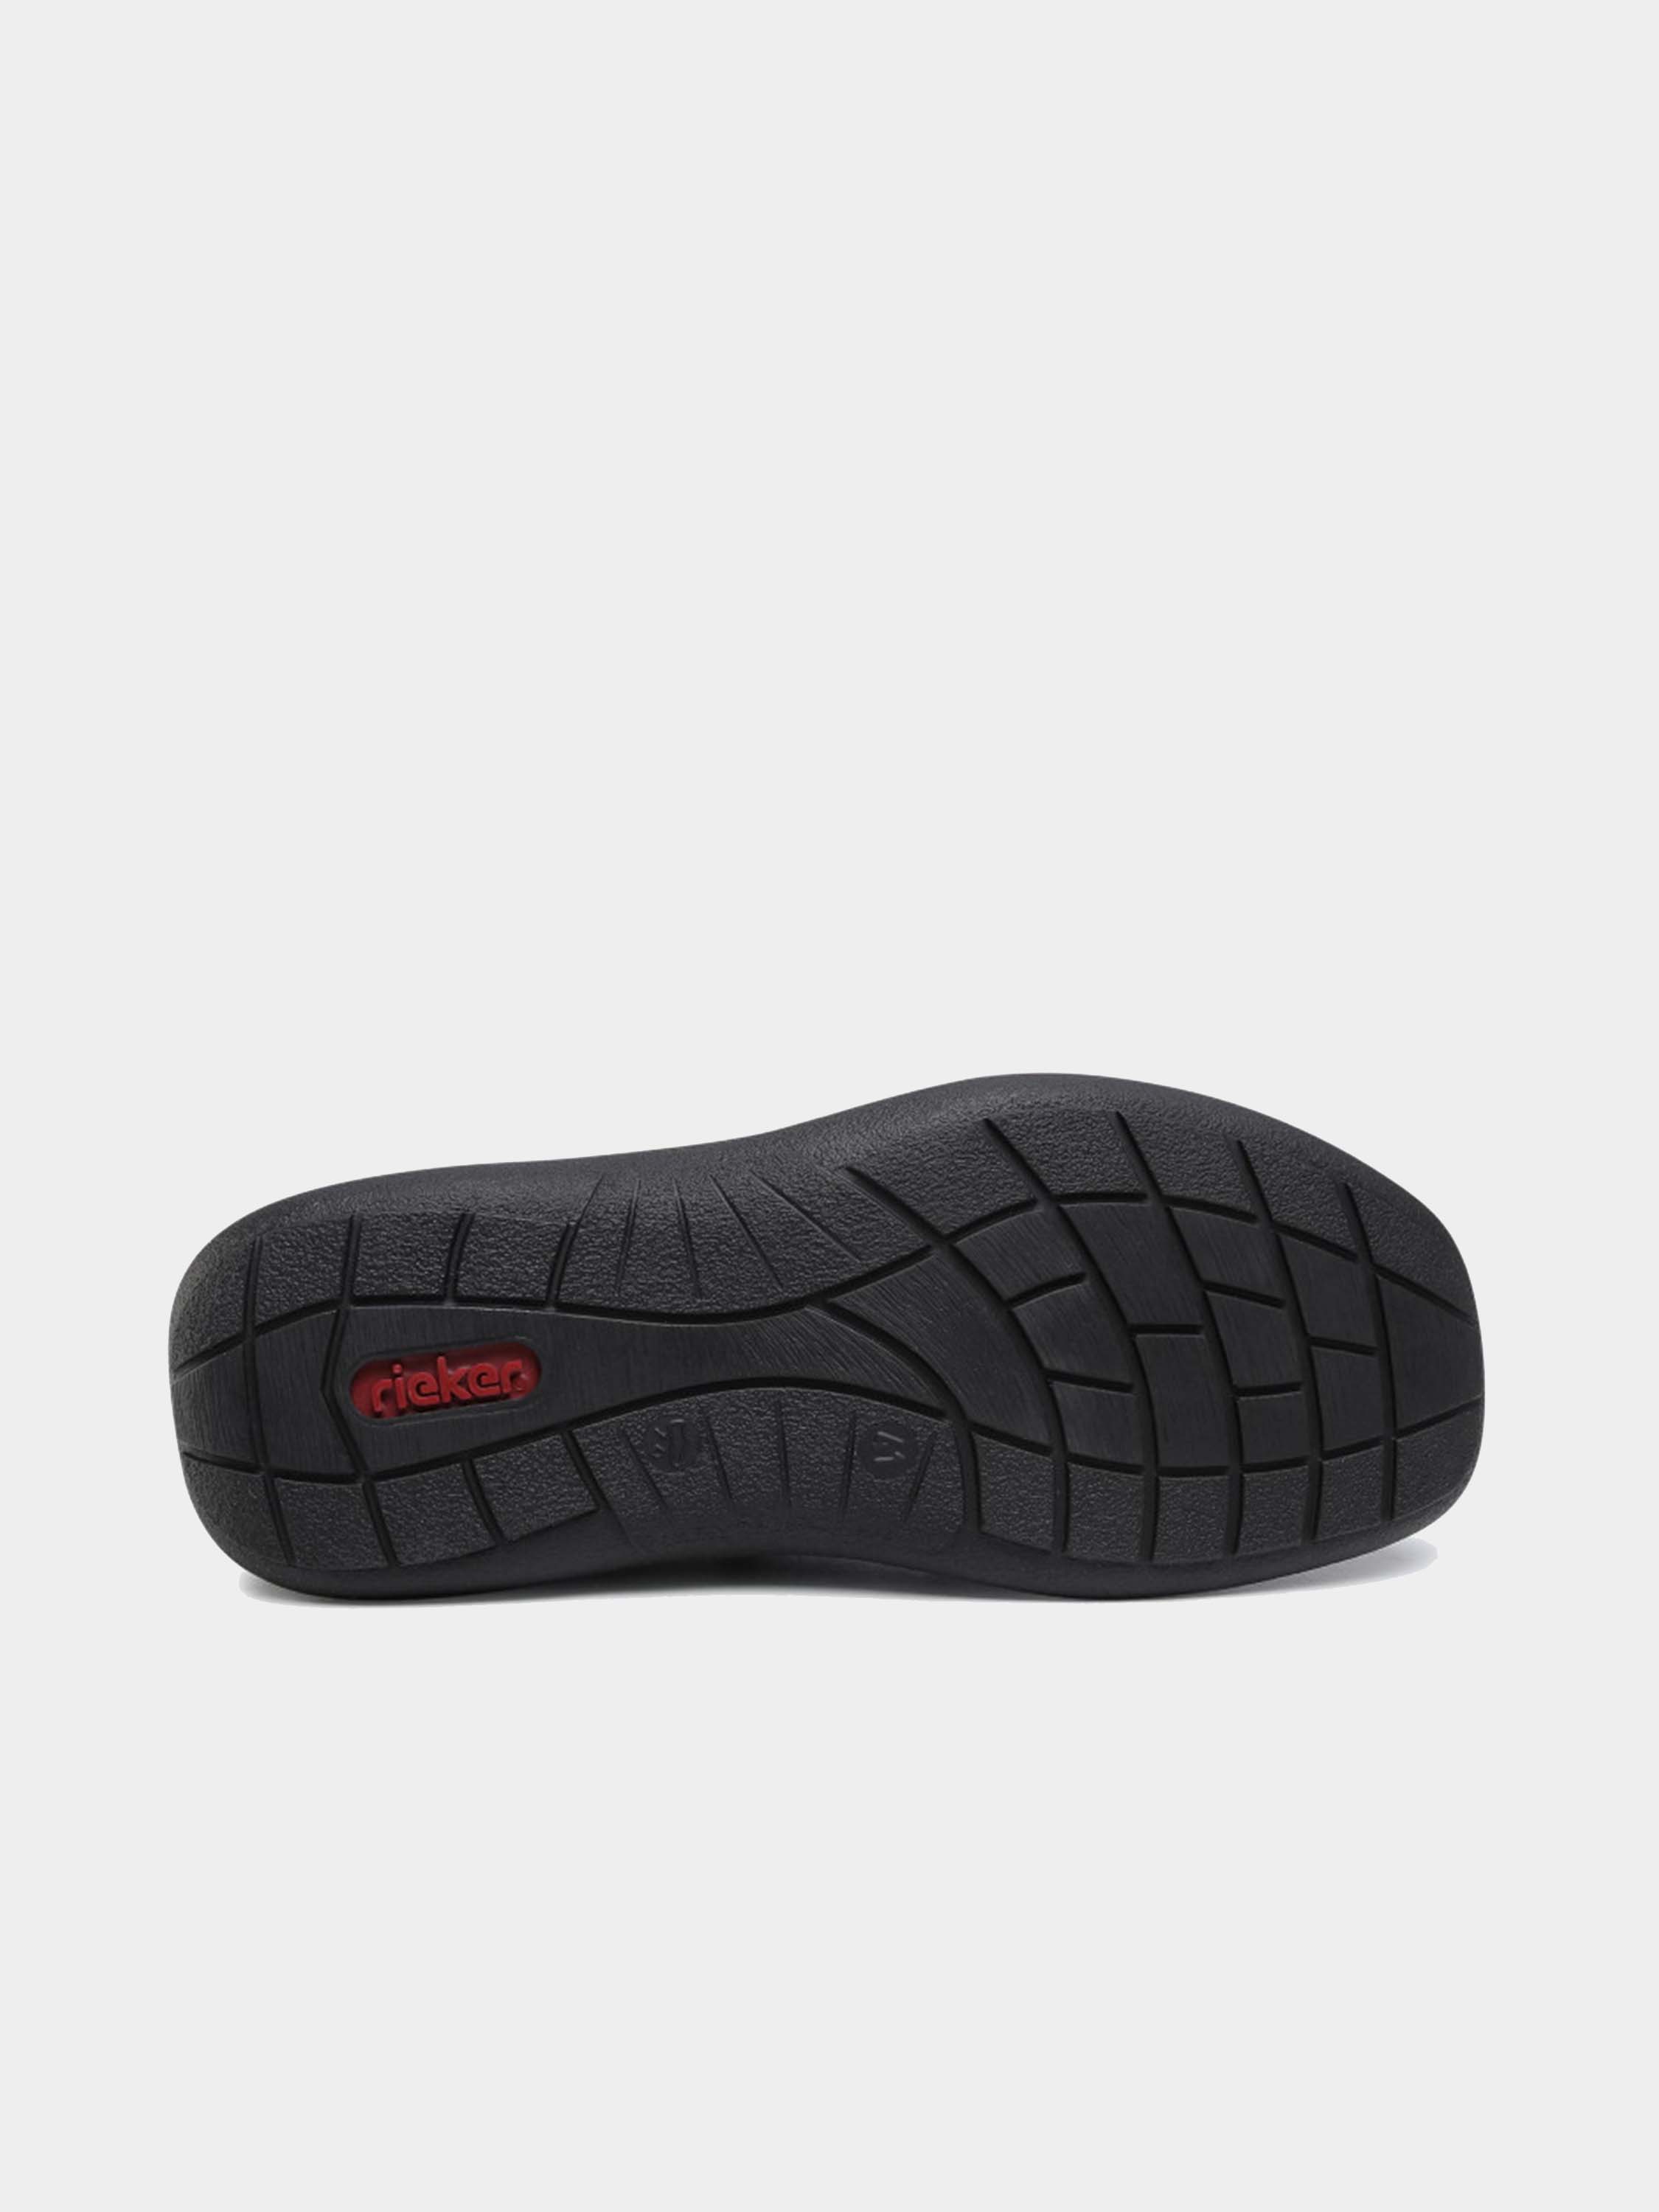 Rieker 03064 Men's Slip On Leather Shoes #color_Black